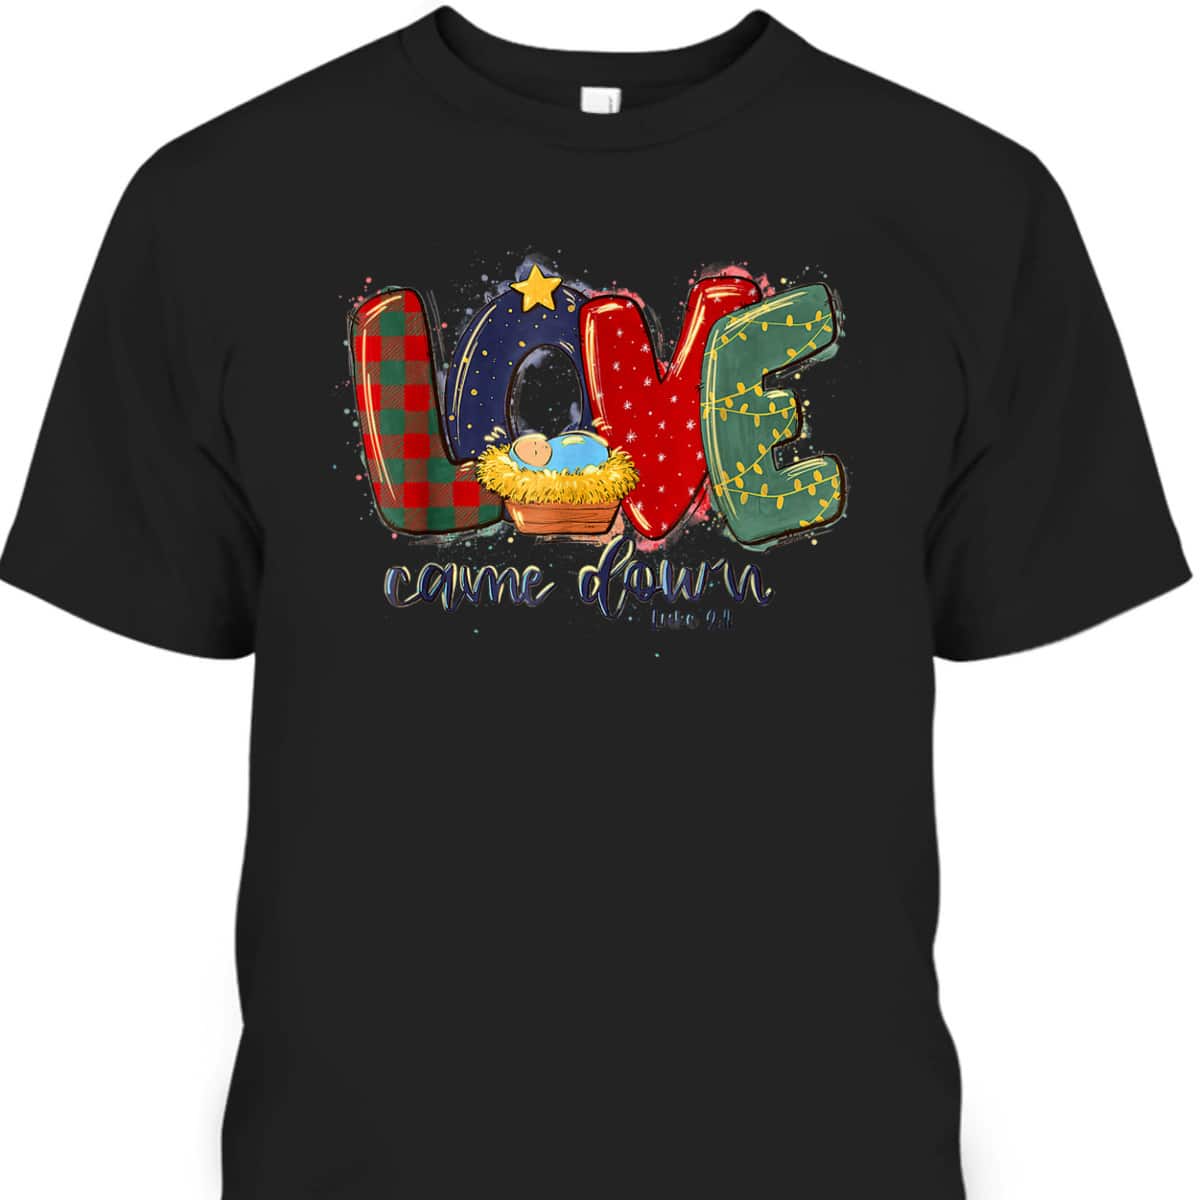 Love Came Down Christmas Jesus Christian Christian Christ Bible Verse T-Shirt